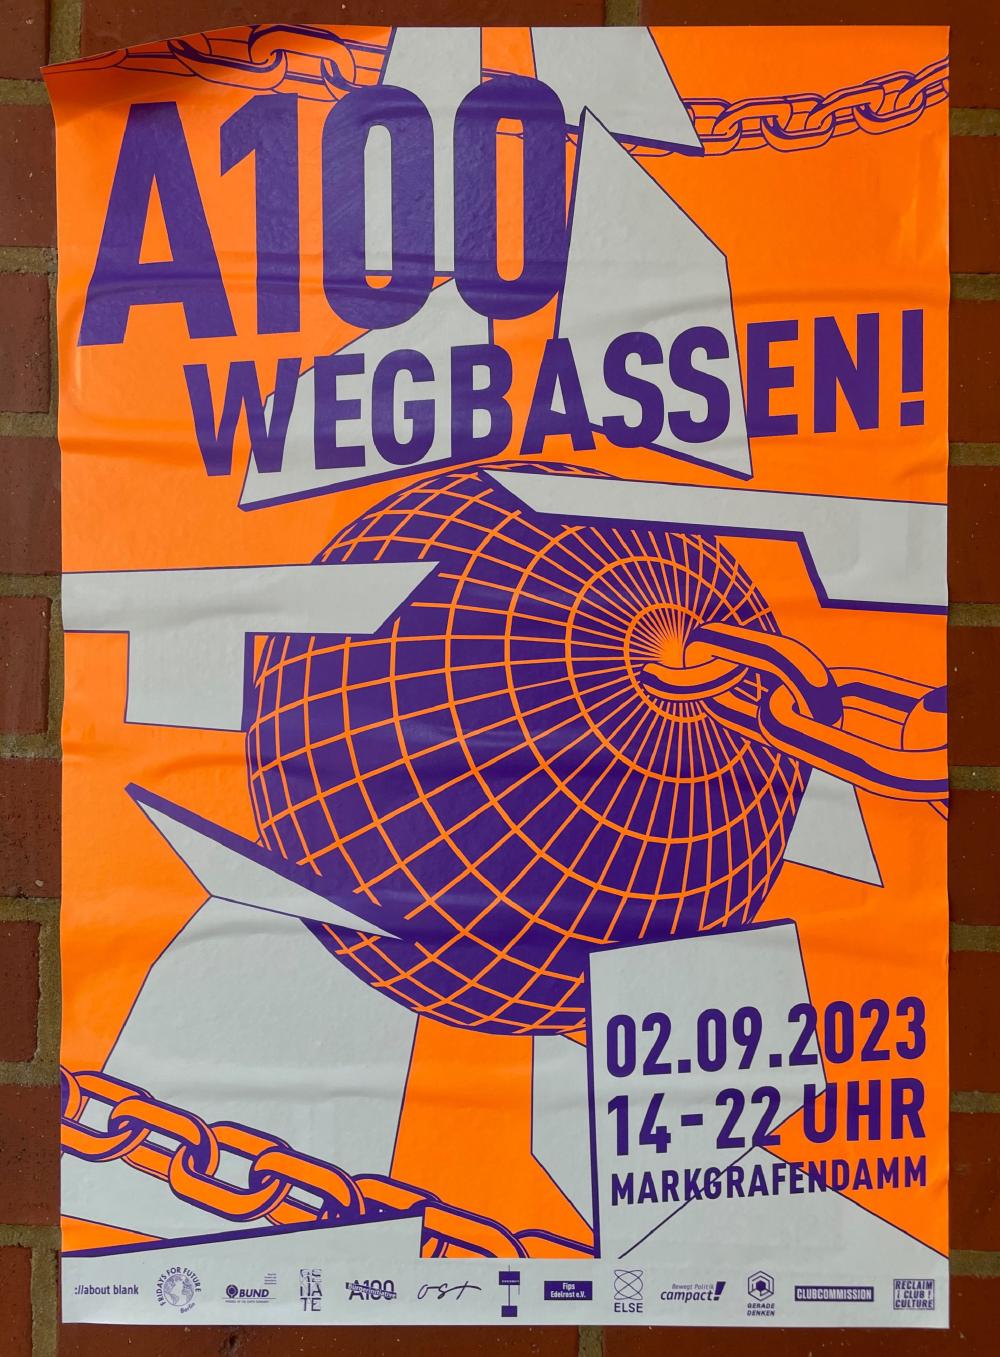 A100 Wegbassen party poster